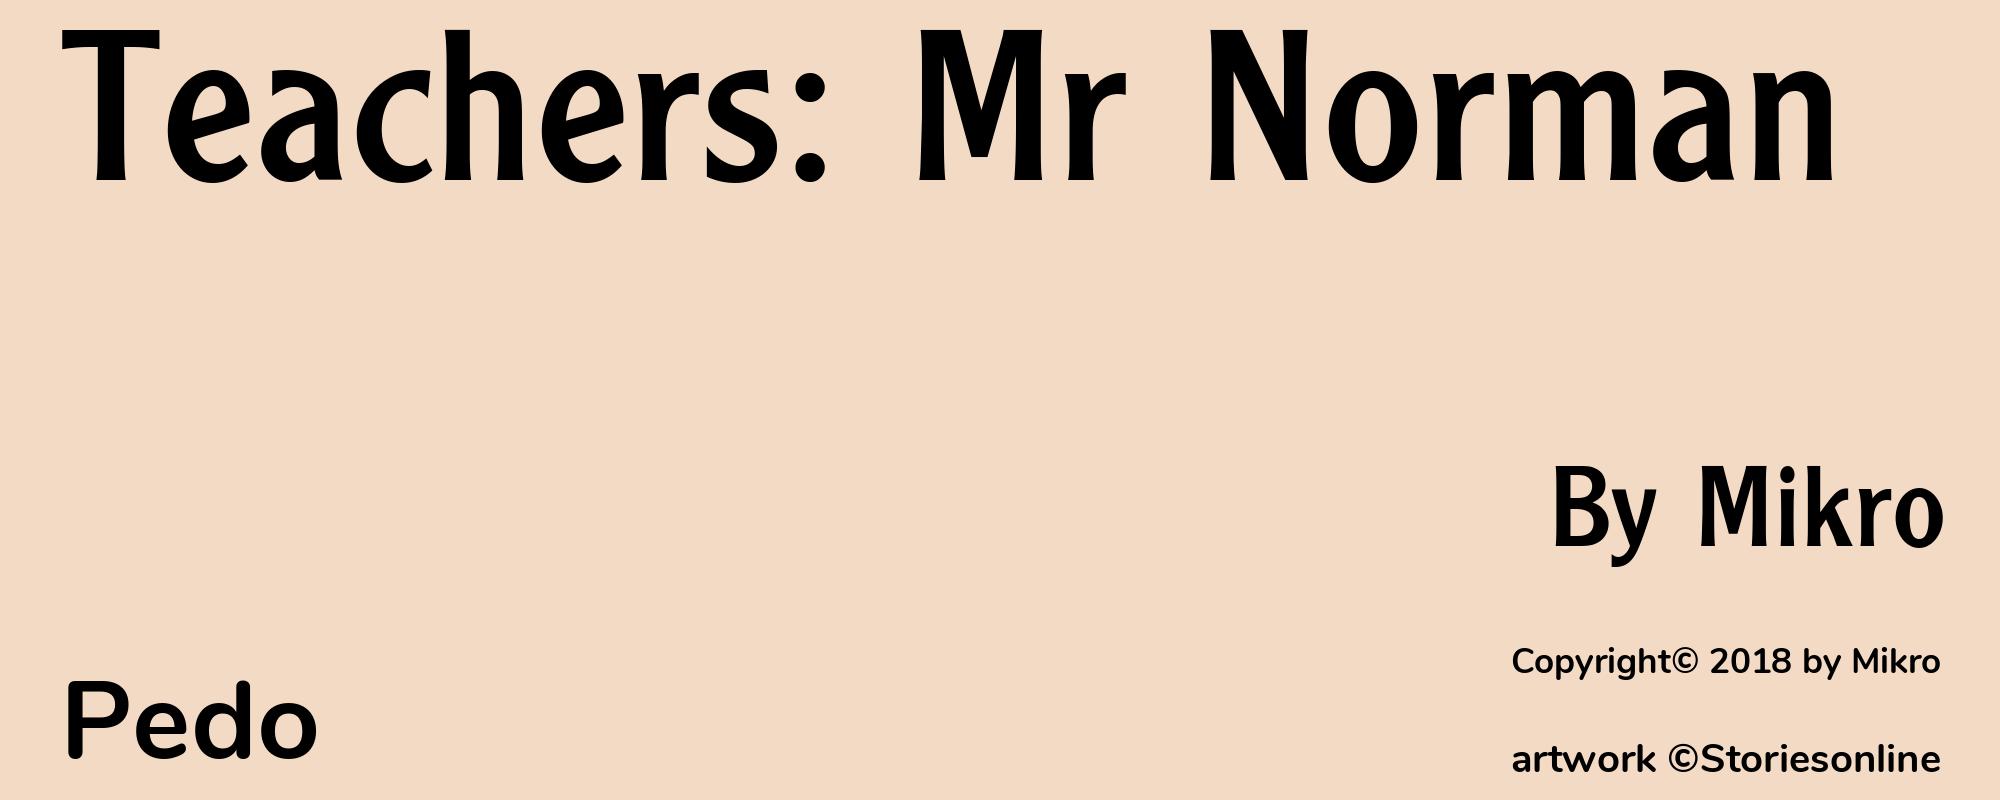 Teachers: Mr Norman - Cover